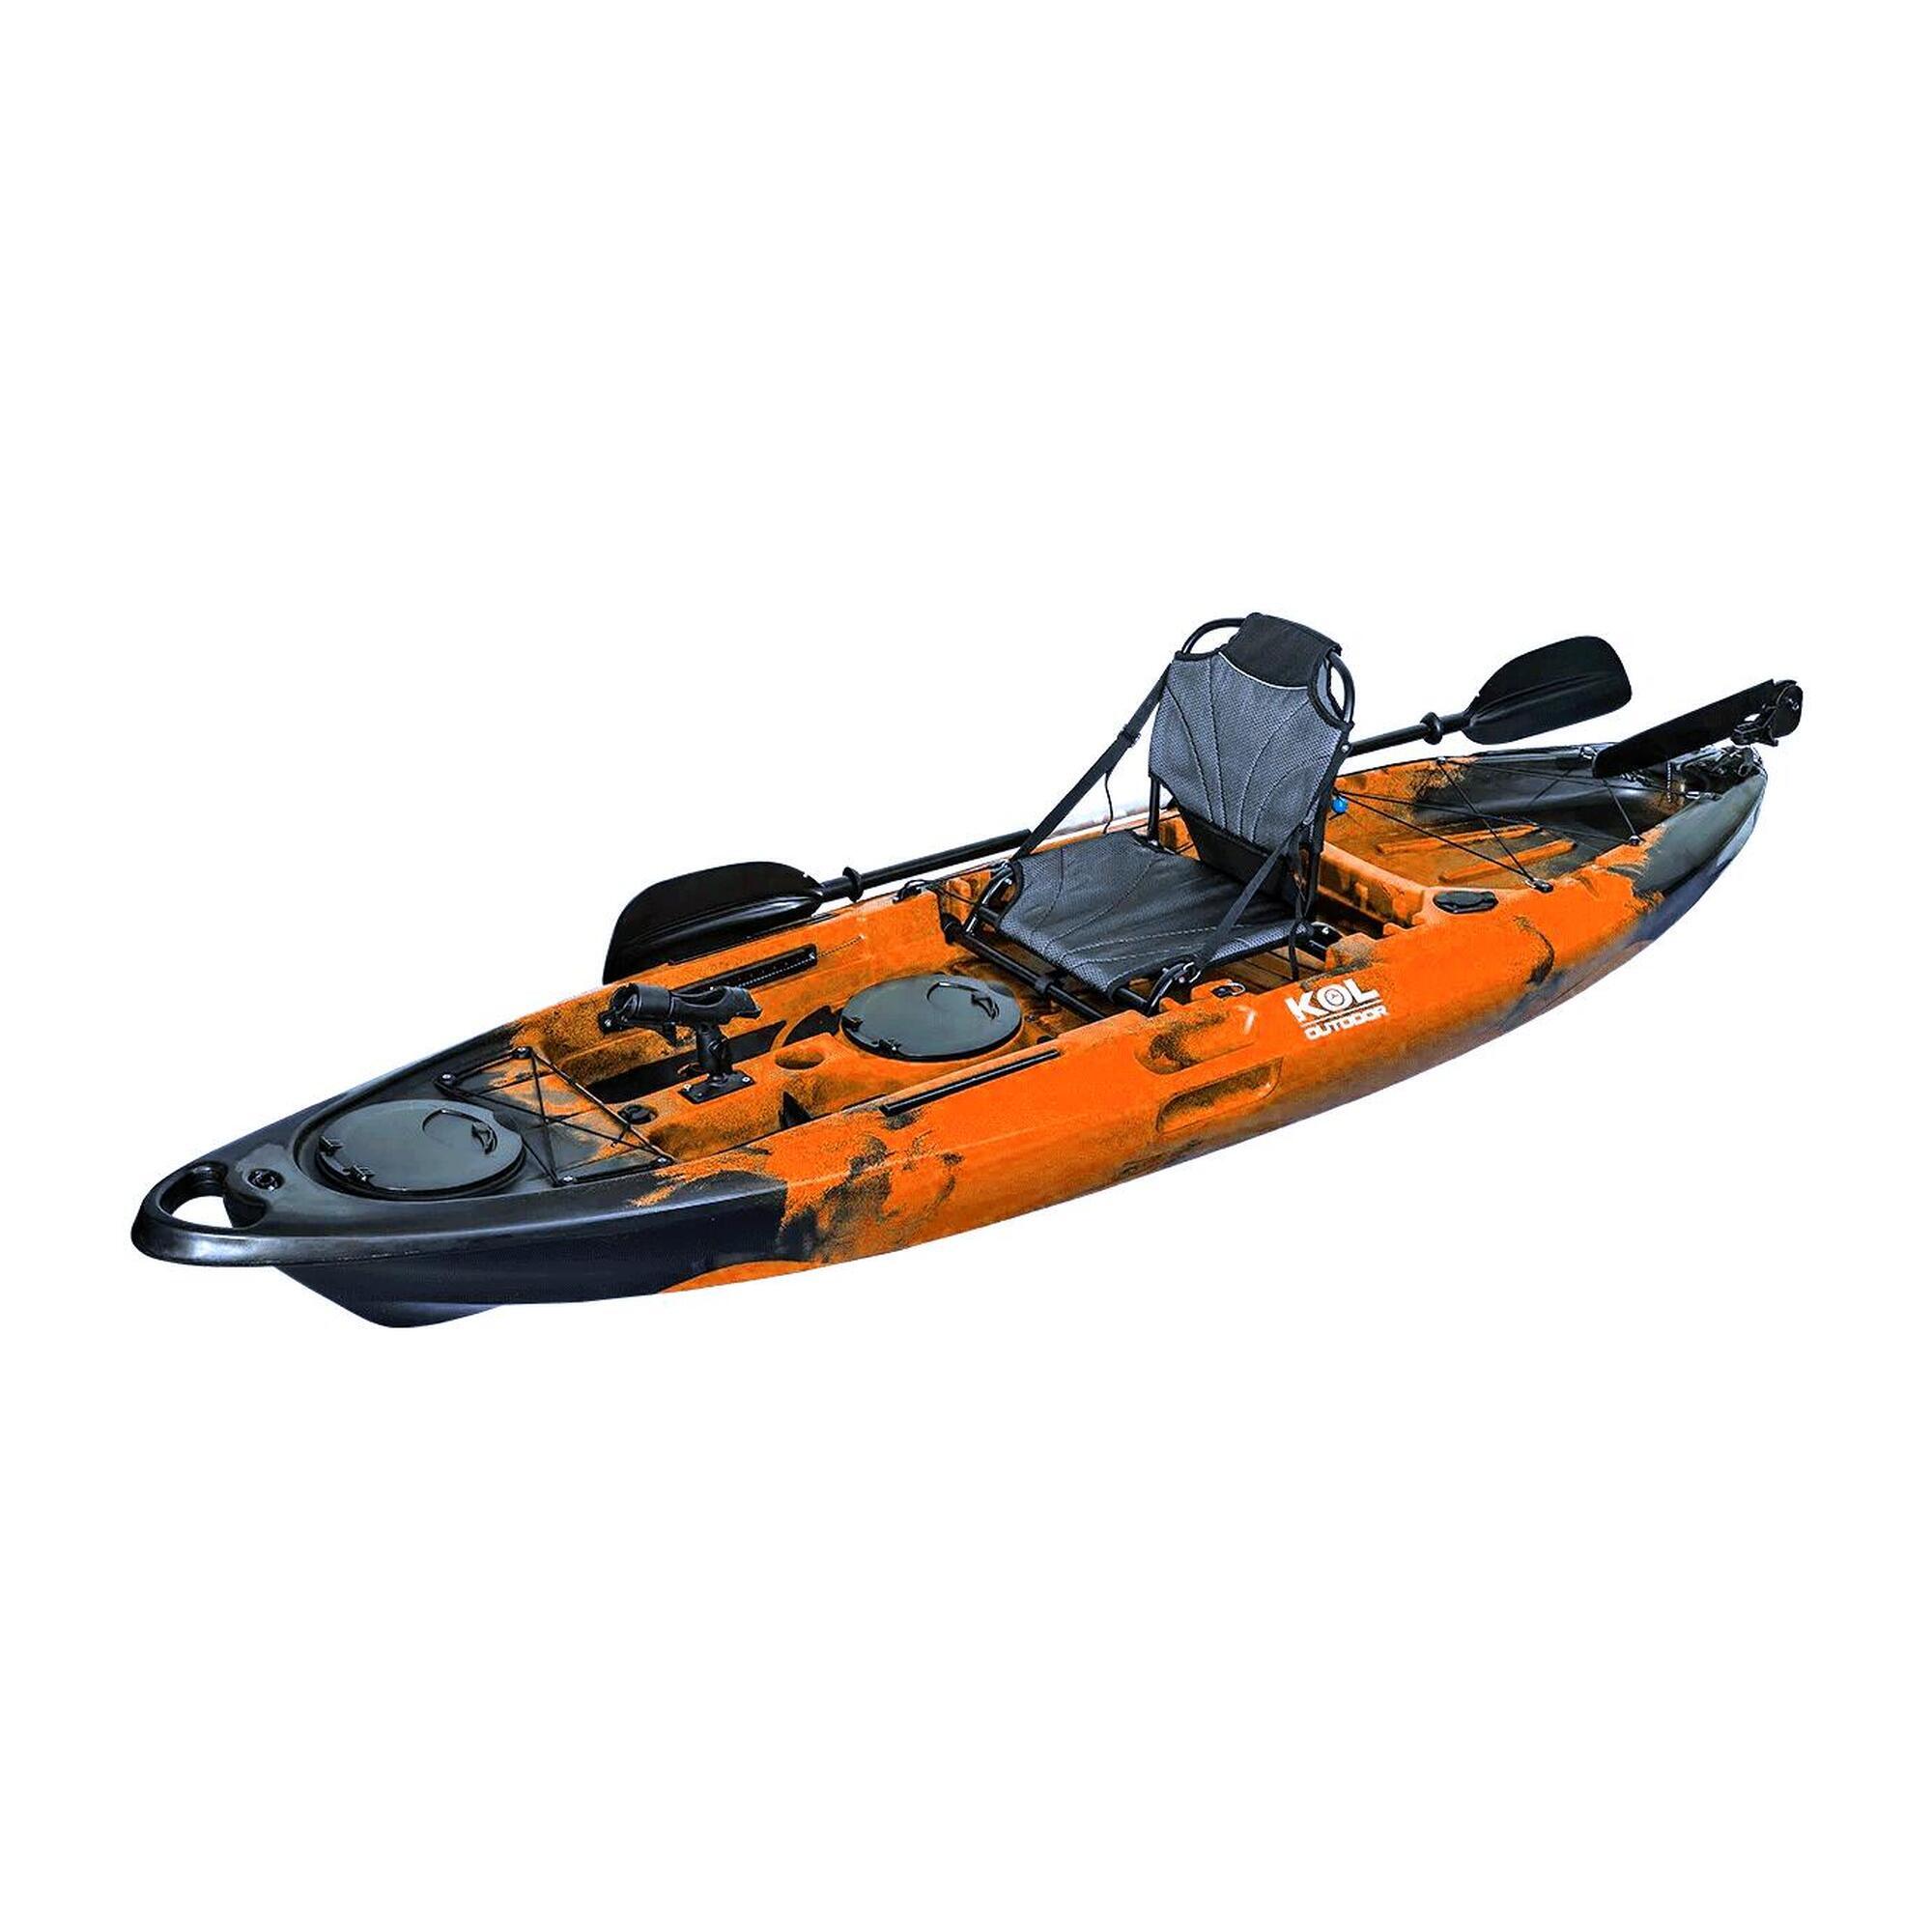 Kayak De Pesca Fury One Con Silla Aluminio Y Timón 310x85cm - naranja-negro - 